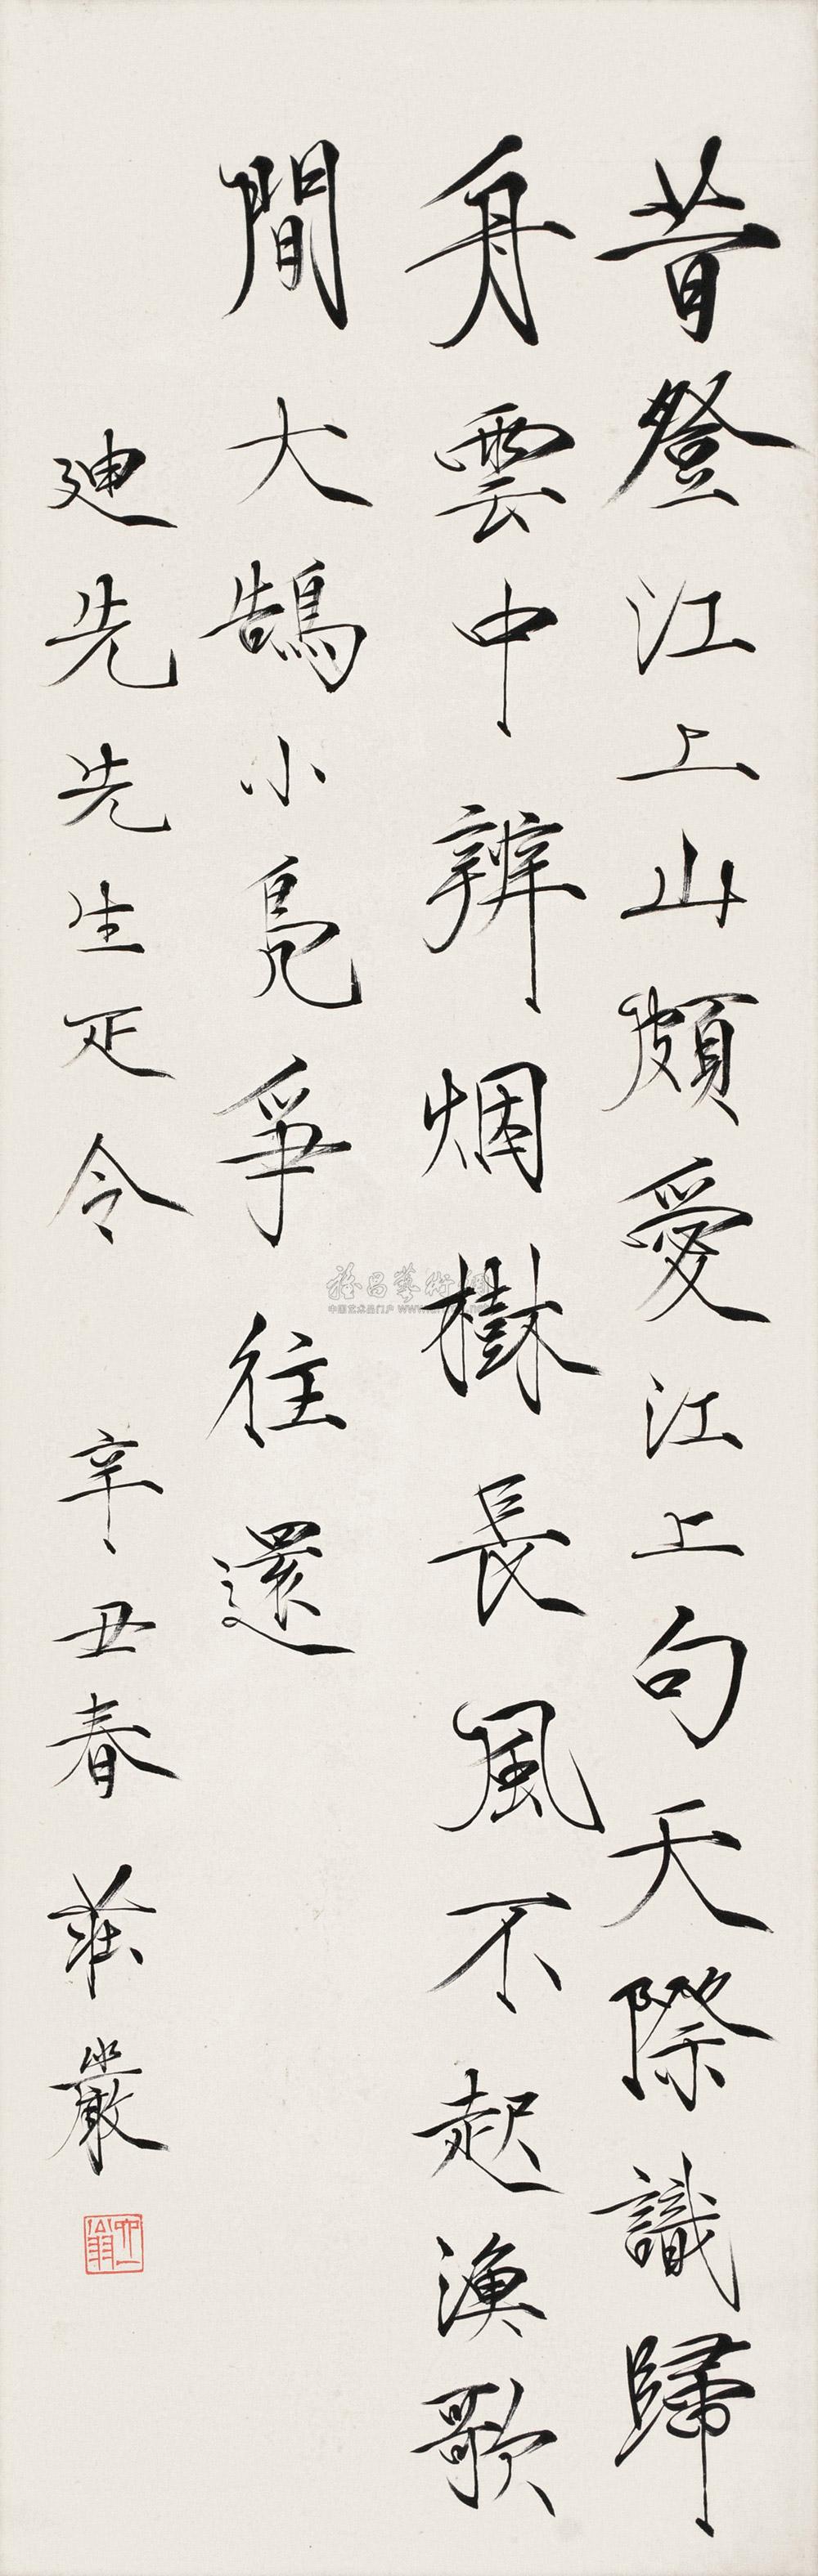 lot:1465 庄严 辛丑(1961年)作 楷书五言诗 立轴